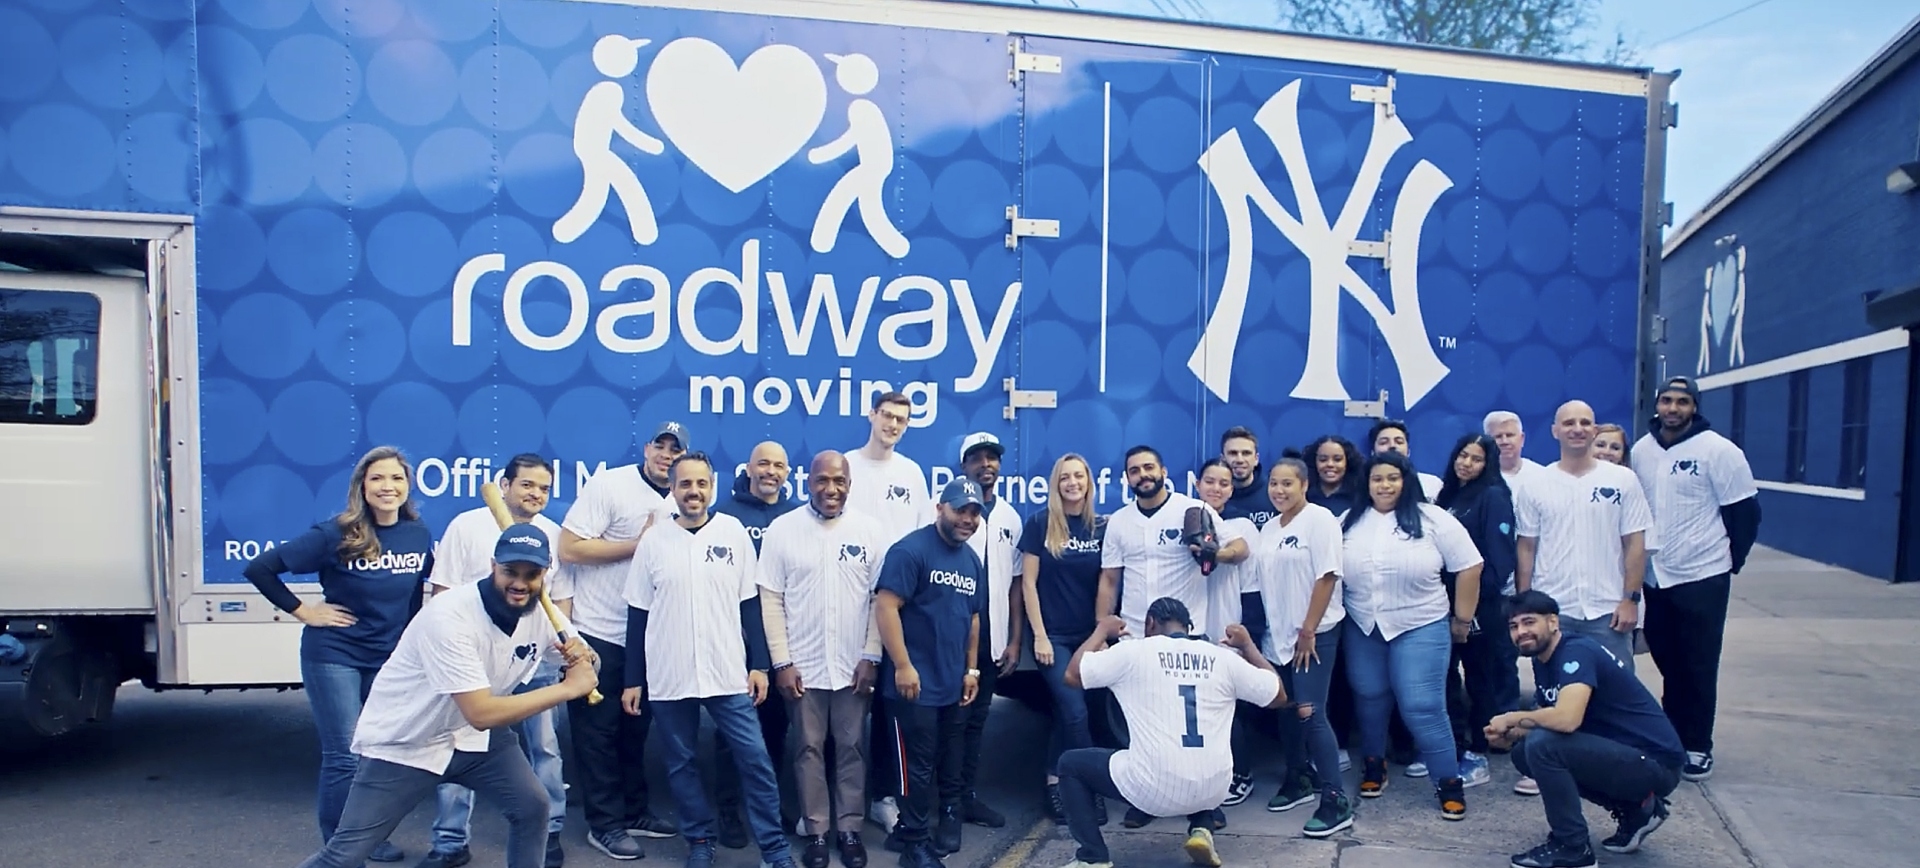 Roadway Moving and Yankees Partnership